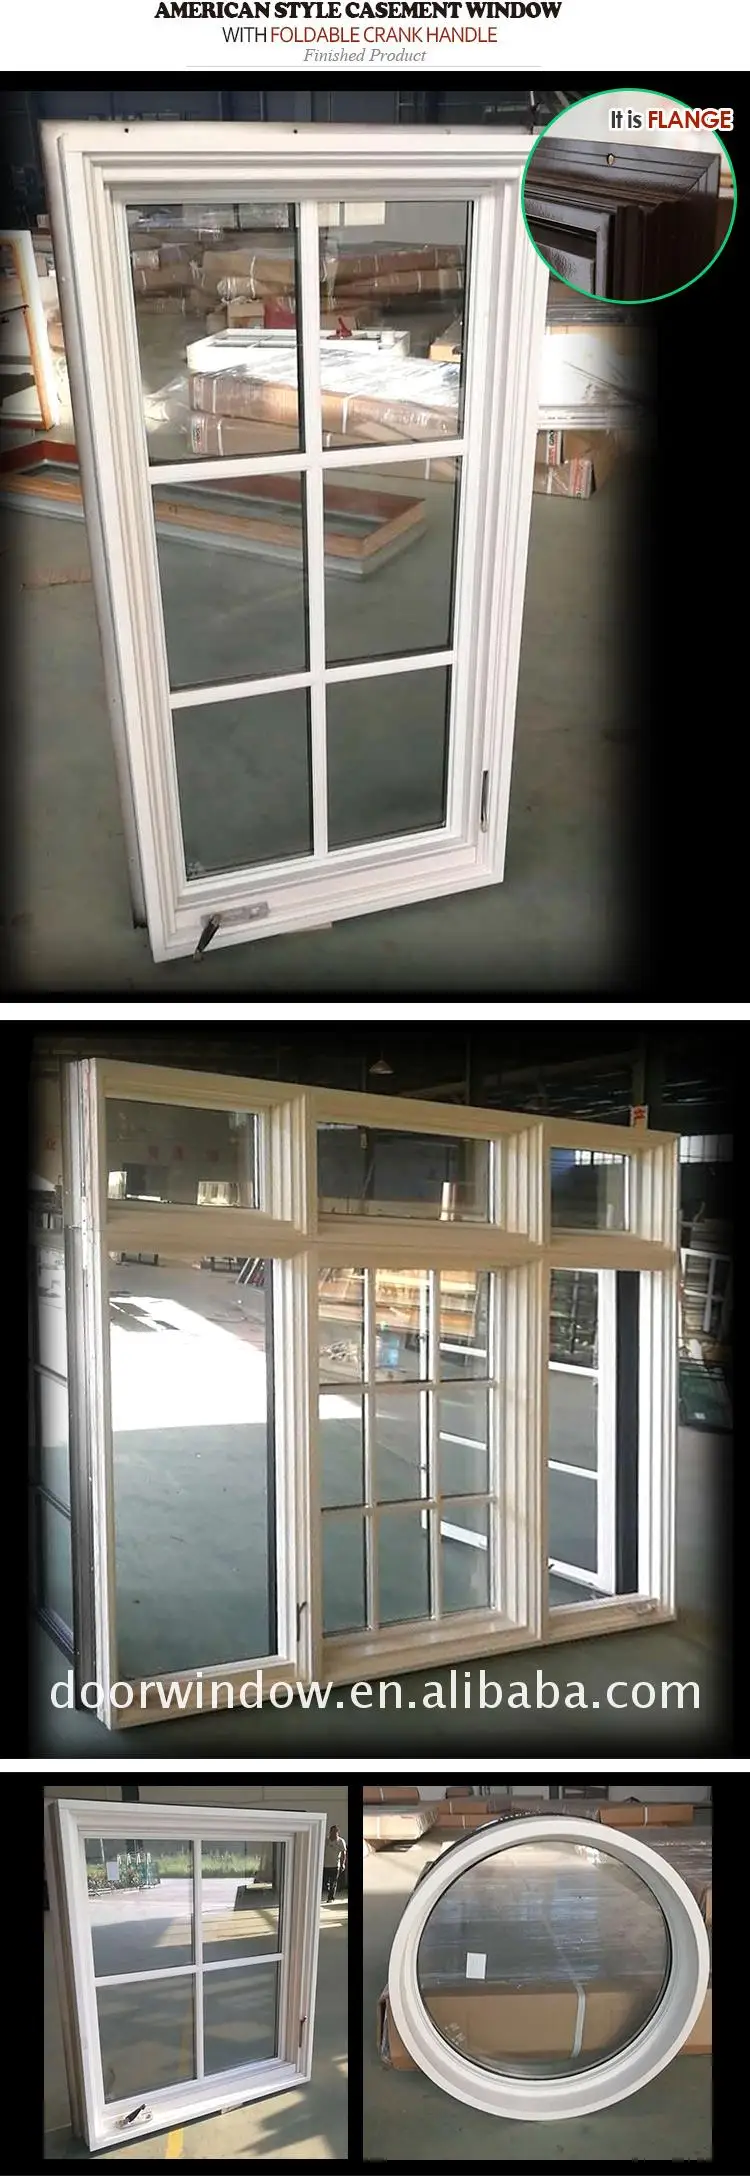 China manufacturer wood casement windows window basement